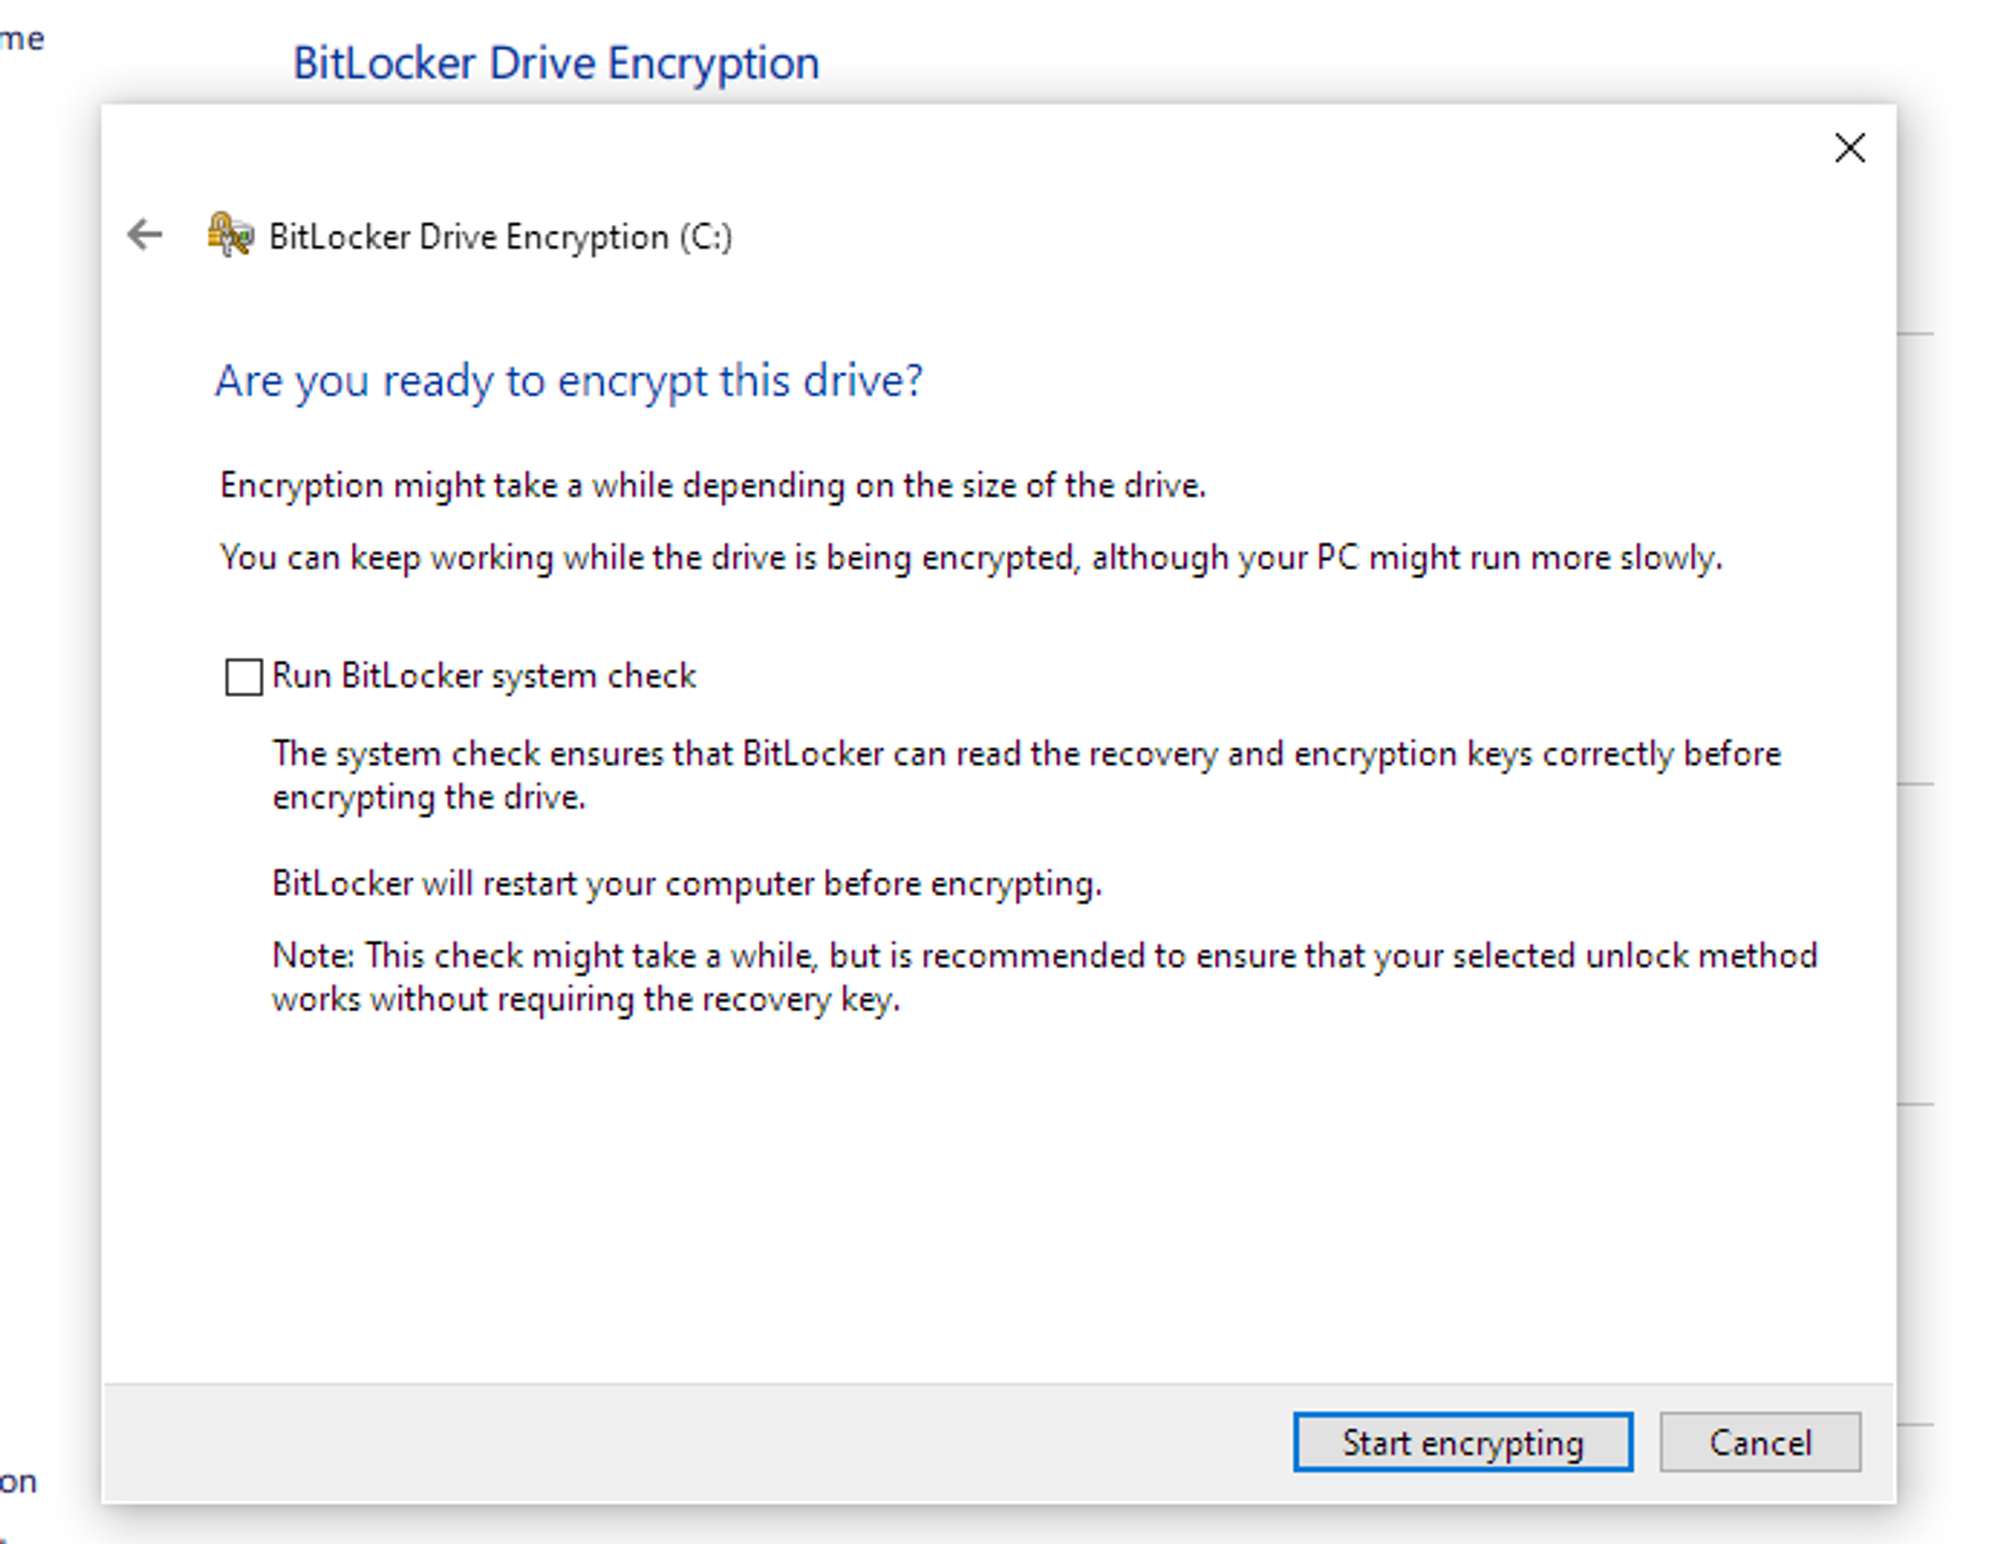 BitLocker Drive Encryption wizard